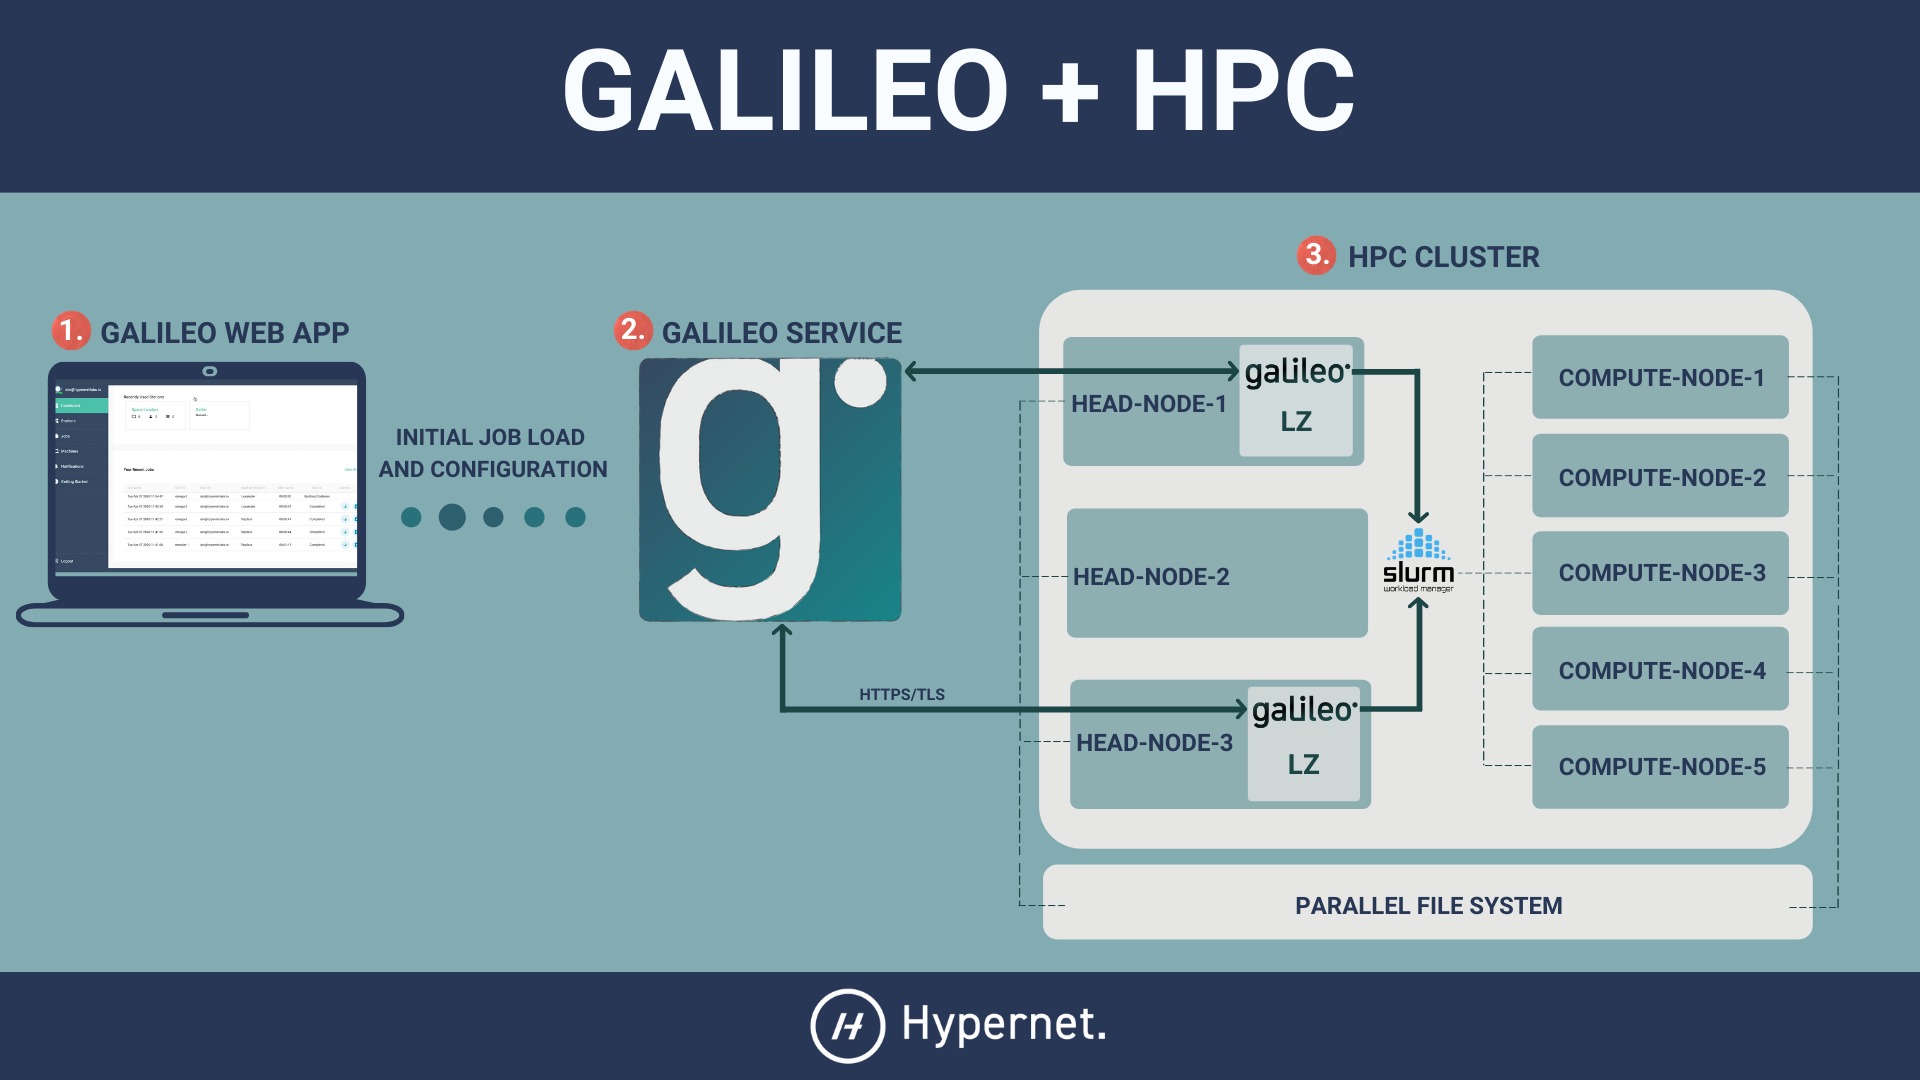 _images/Galileo_HPC_gateway.png